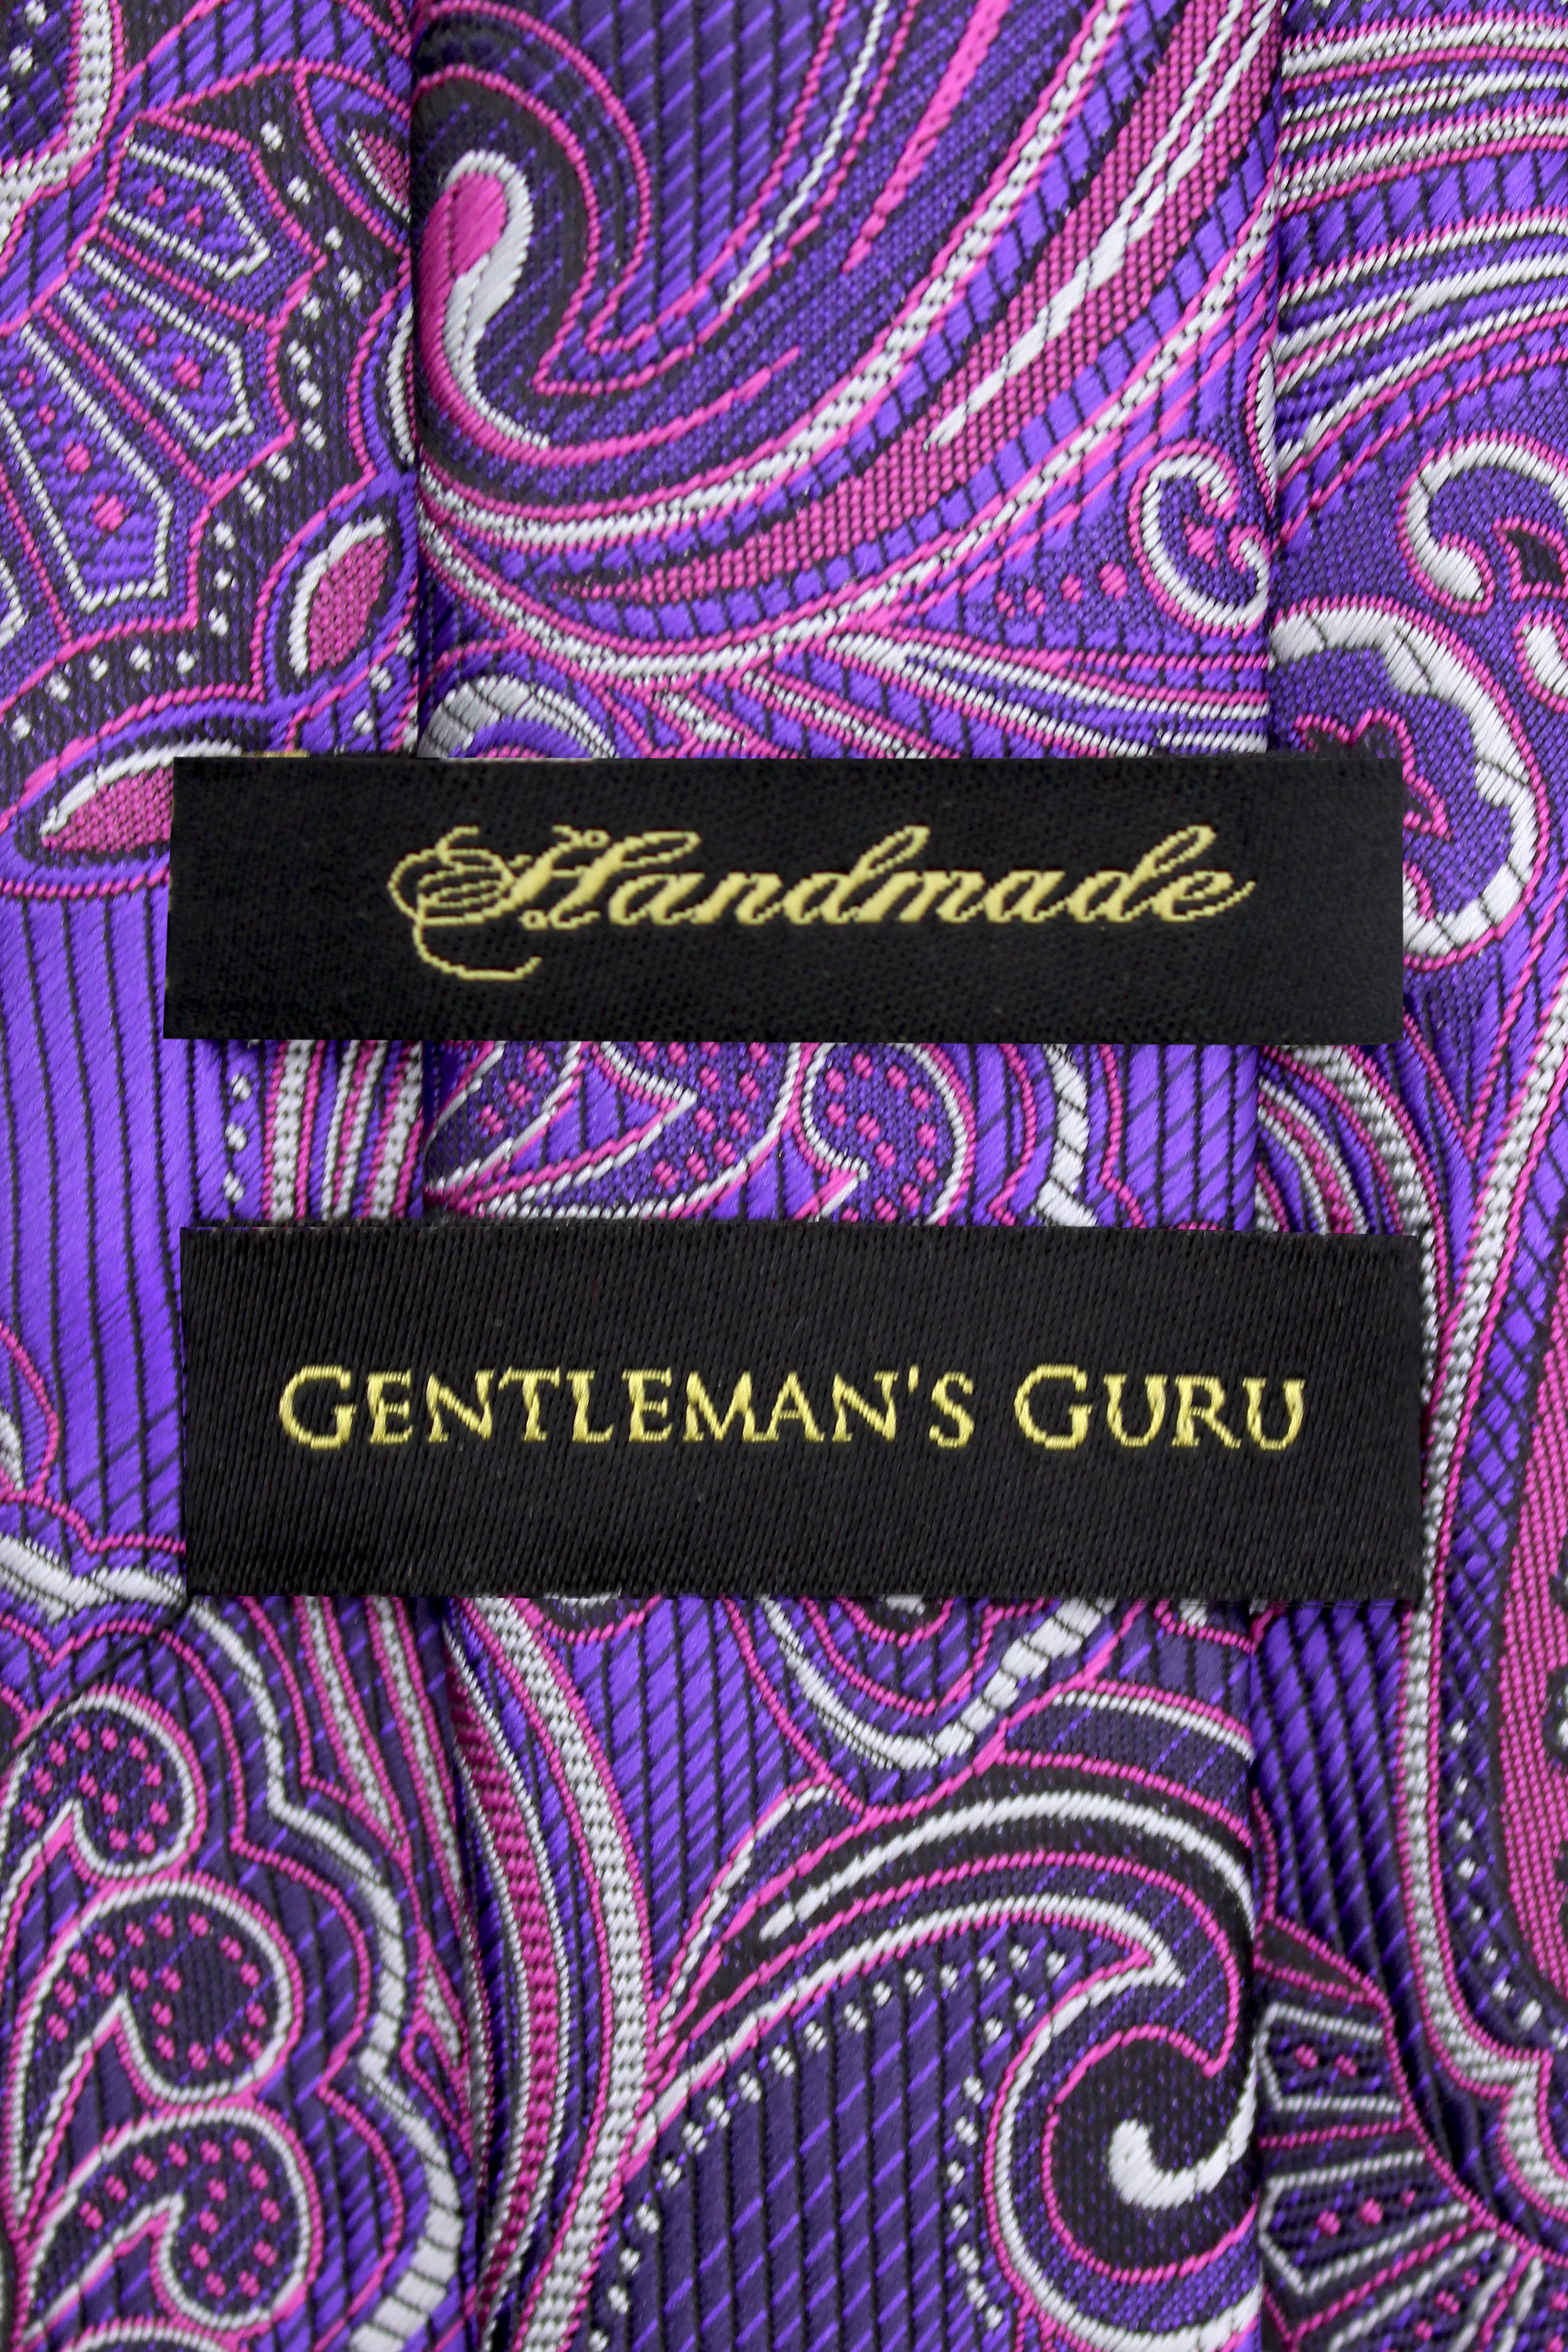 Purple-Violet-Tie-Branded-Neckie-Handmade-Stripes-from-Gentlemansguru.com